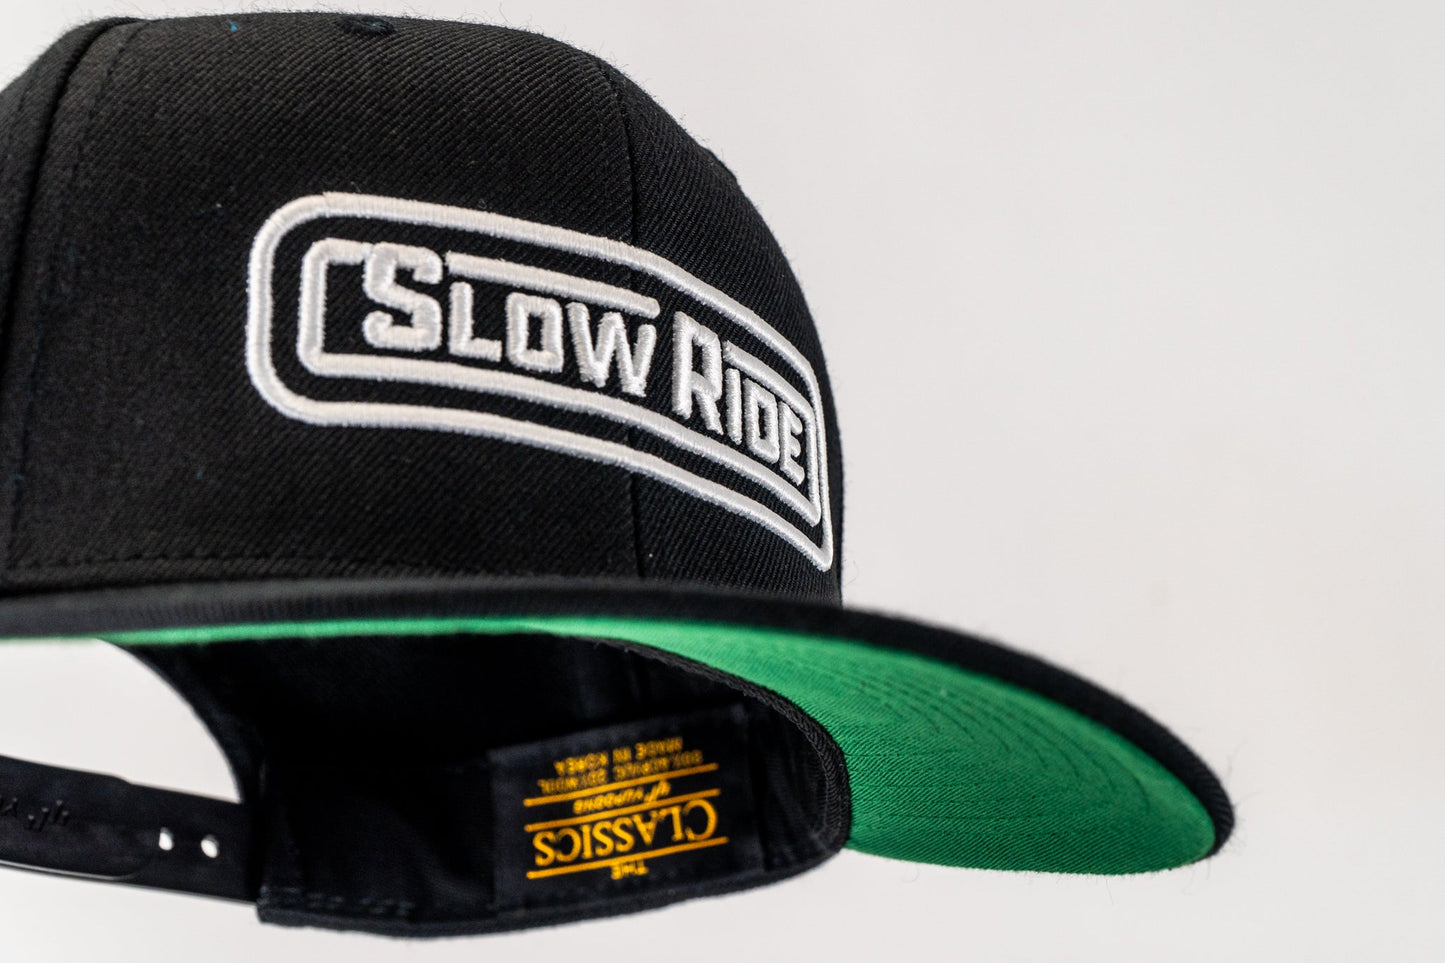 Radio Hat (Black) - Slow Ride